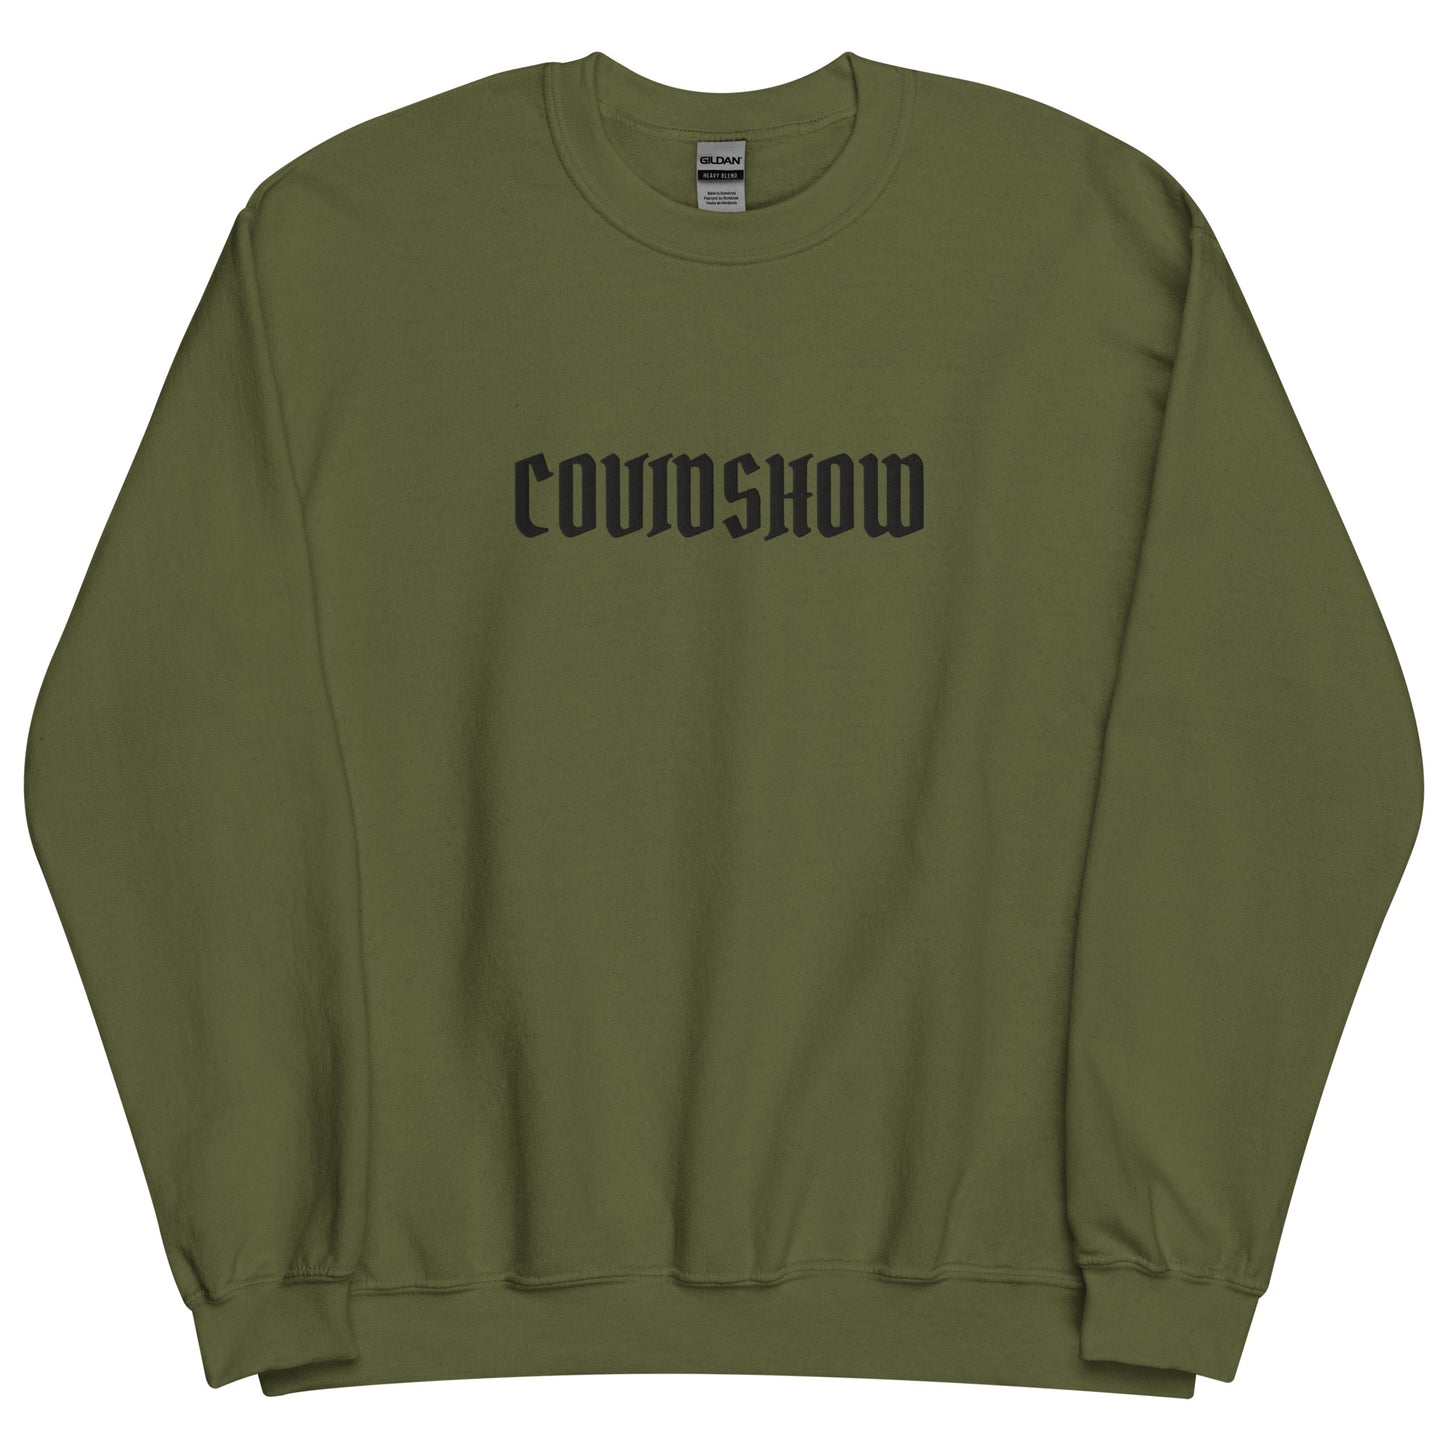 Covidshow embroidered text logo Unisex Sweatshirt